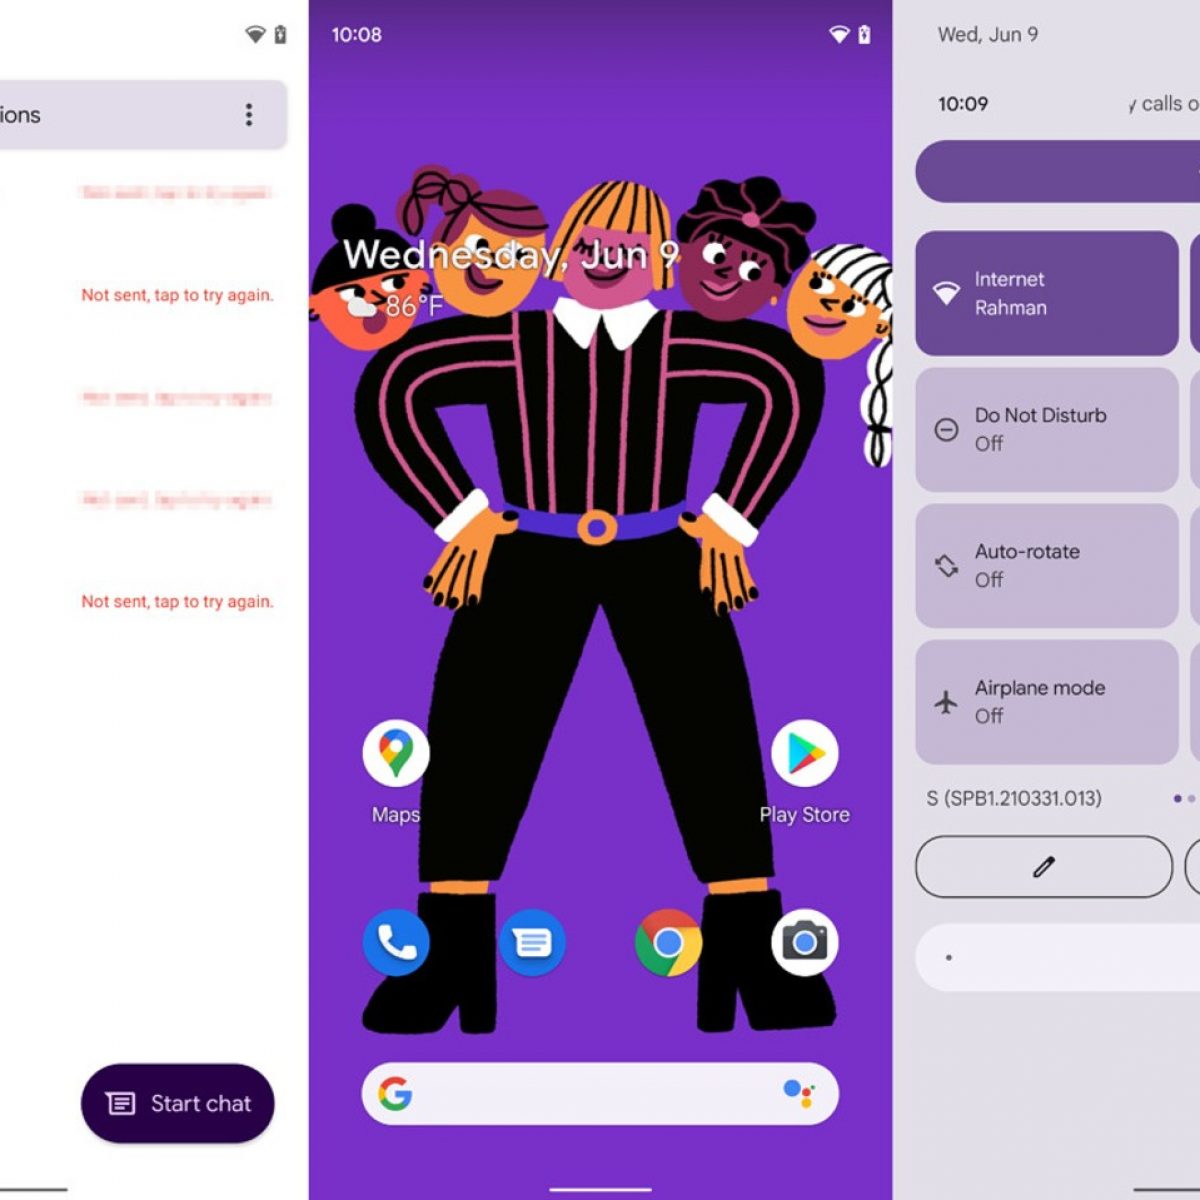 App purple what messages? has 